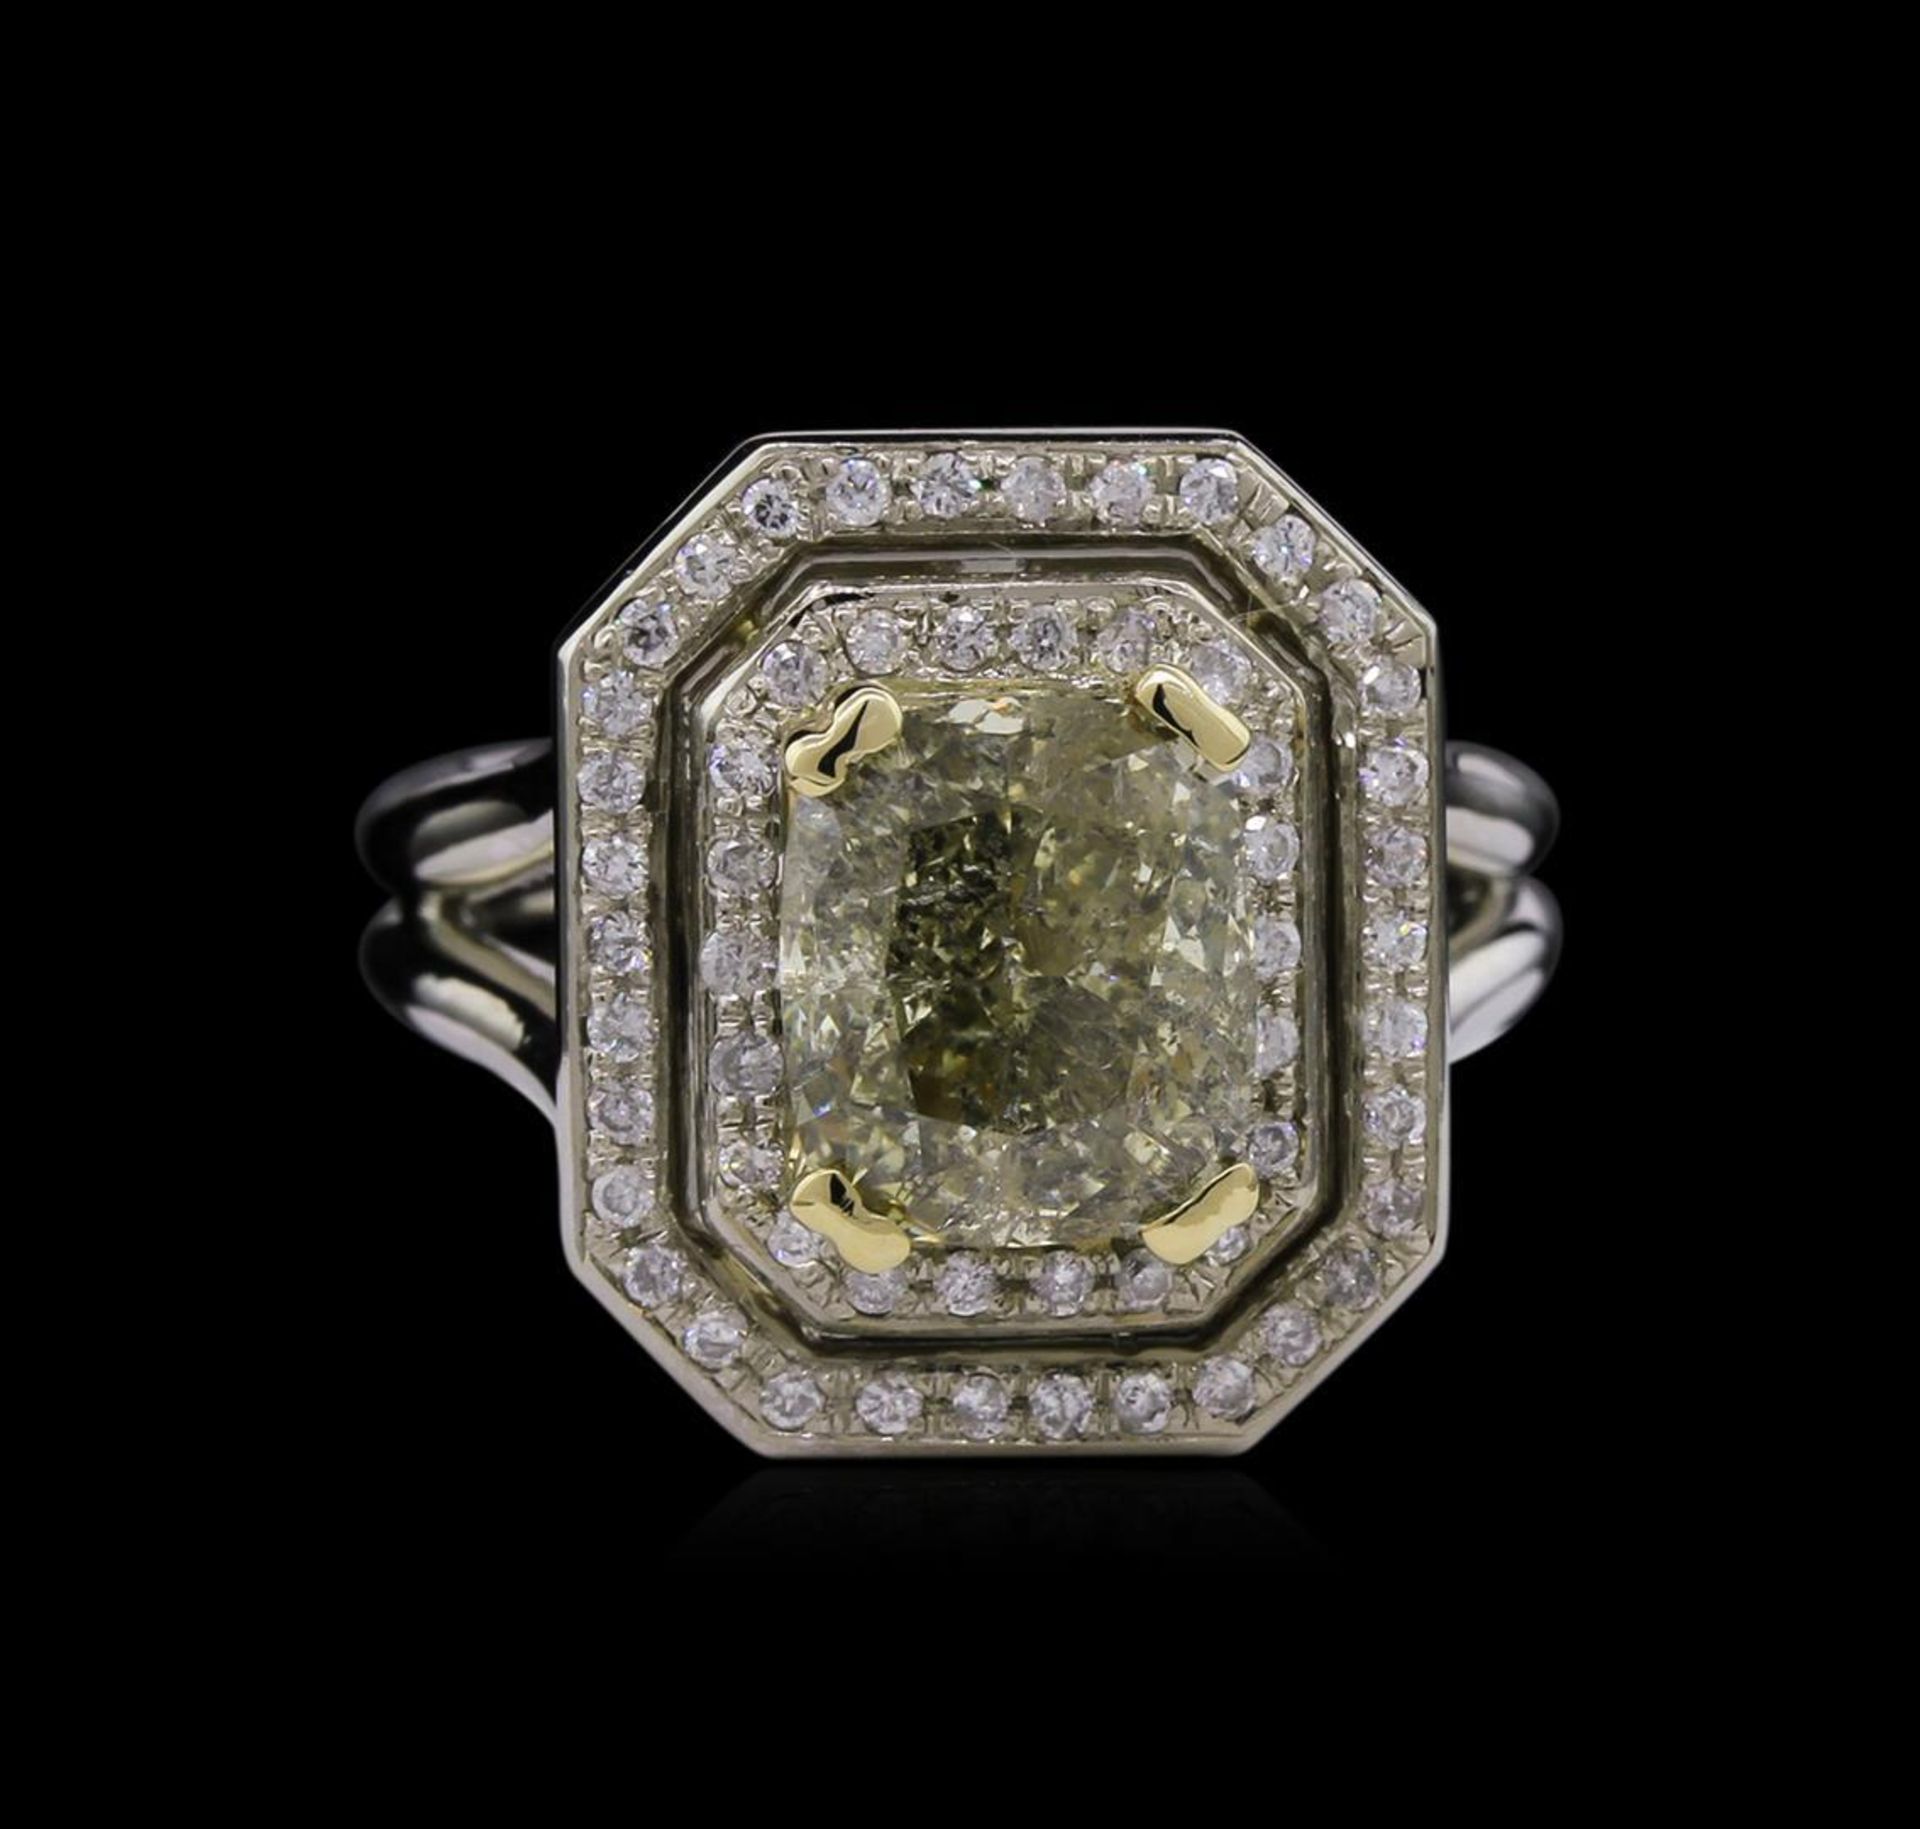 3.36 ctw Fancy Light Greenish Yellow Diamond Ring - 14KT Two-Tone Gold - Image 2 of 3